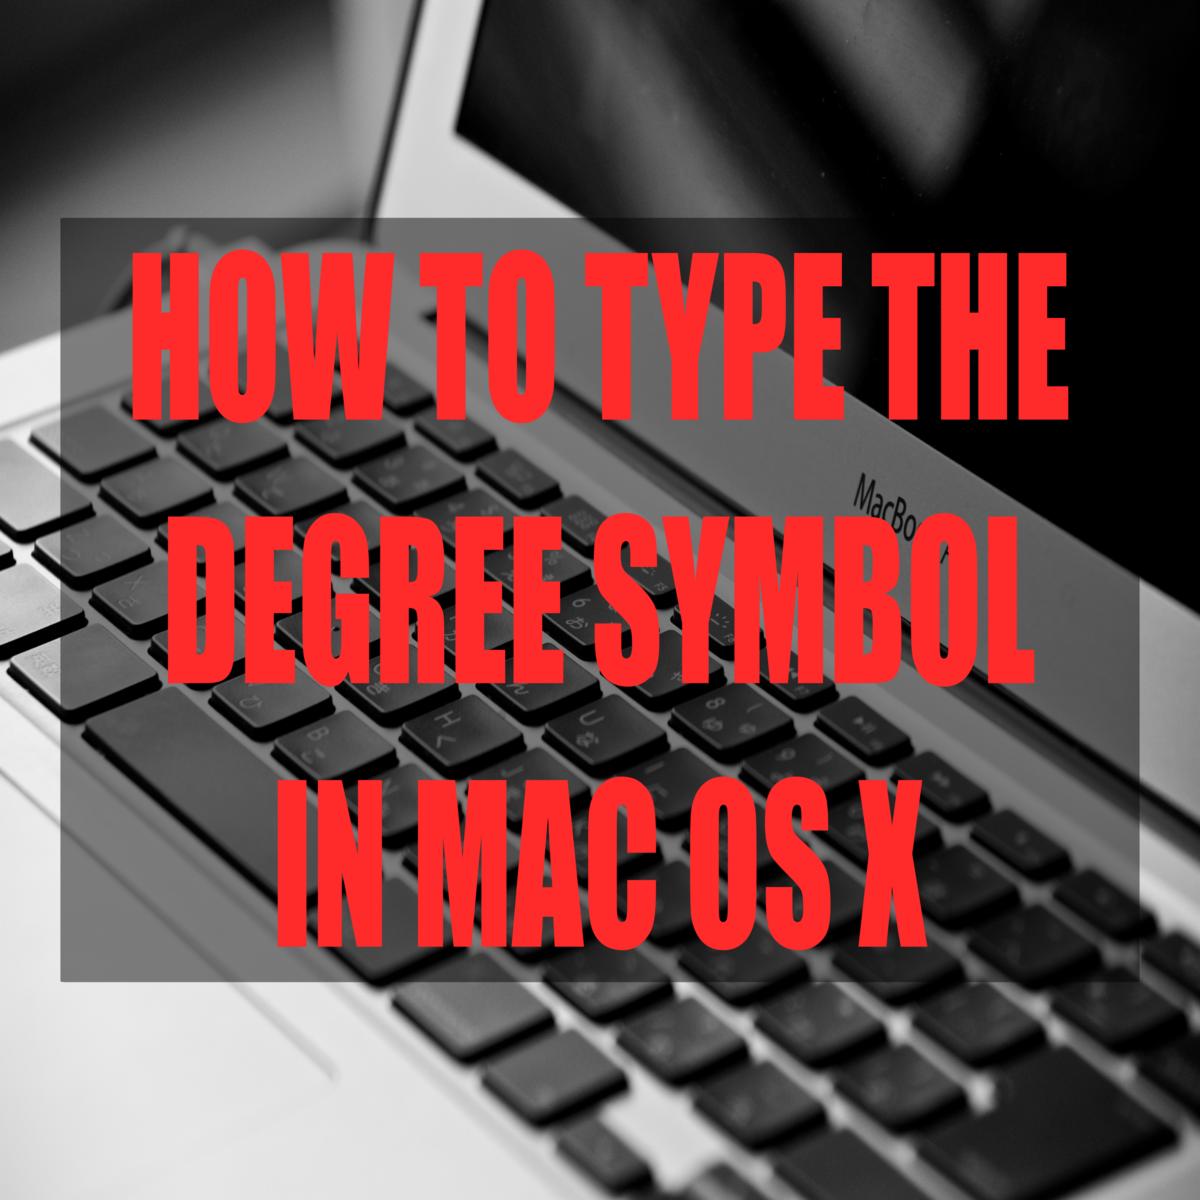 Type degrees symbol on mac